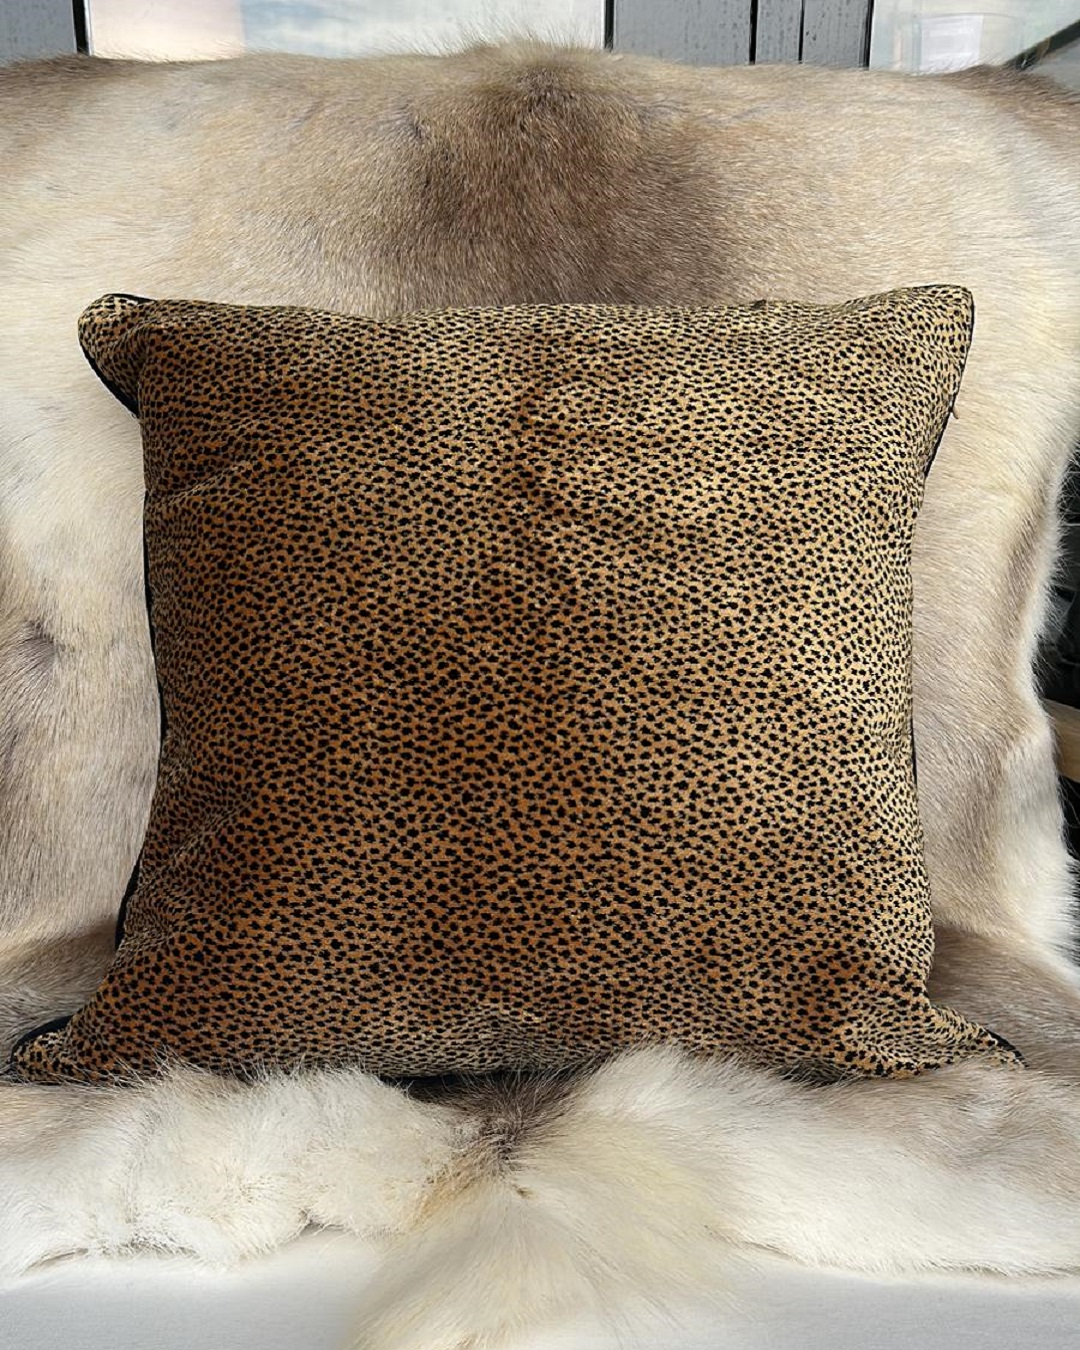 Leopard cushion cover on skin